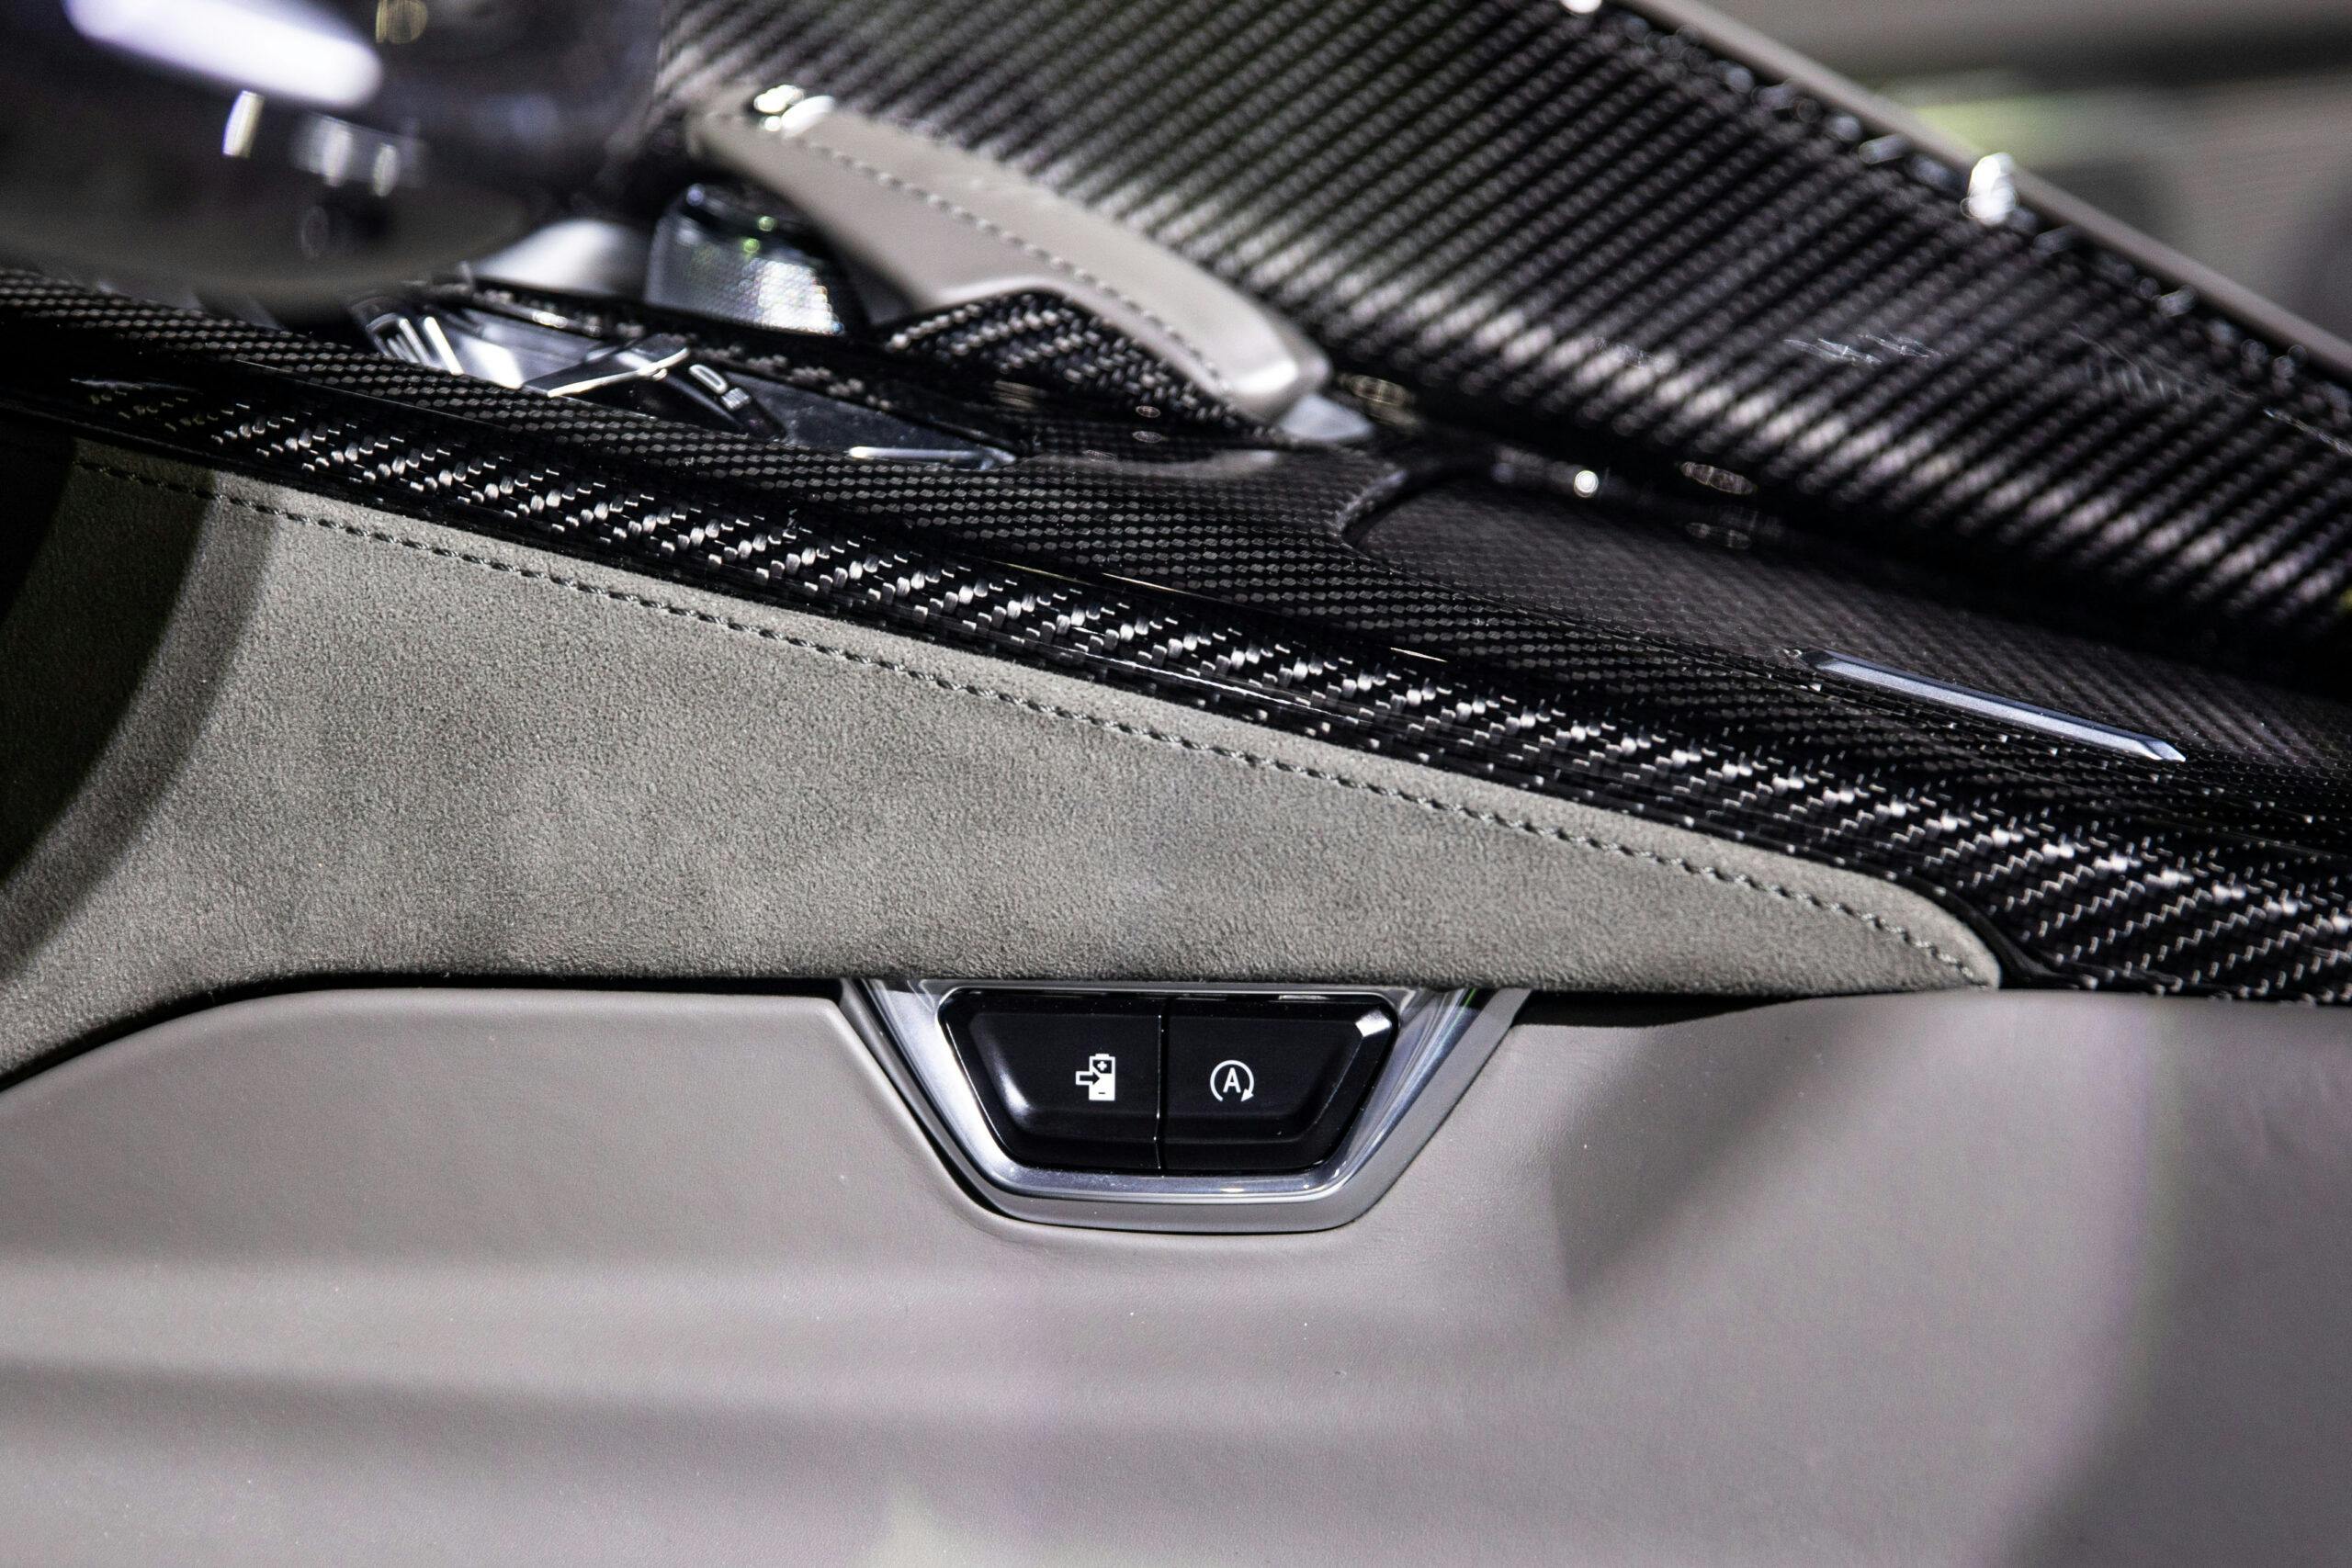 New Corvette E-Ray hybrid interior material